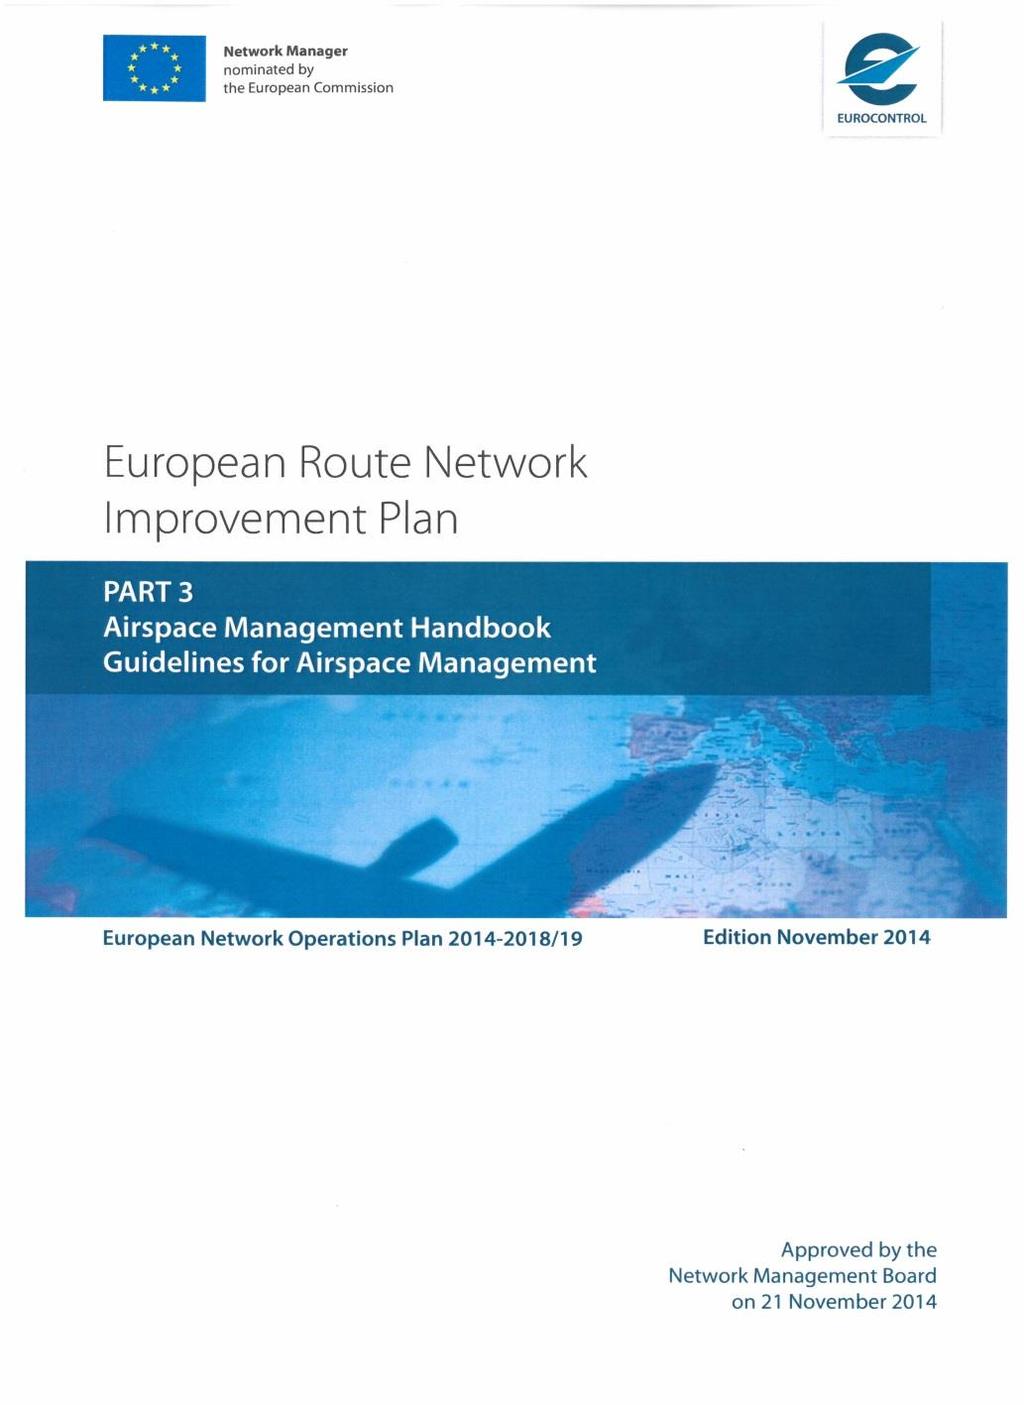 Appendix A Page 1 EUROCONTROL has developed the European Route Network Improvement Plan Part 3 Airspace Management Guidelines - The Airspace Management Handbook (ASM) Handbook.